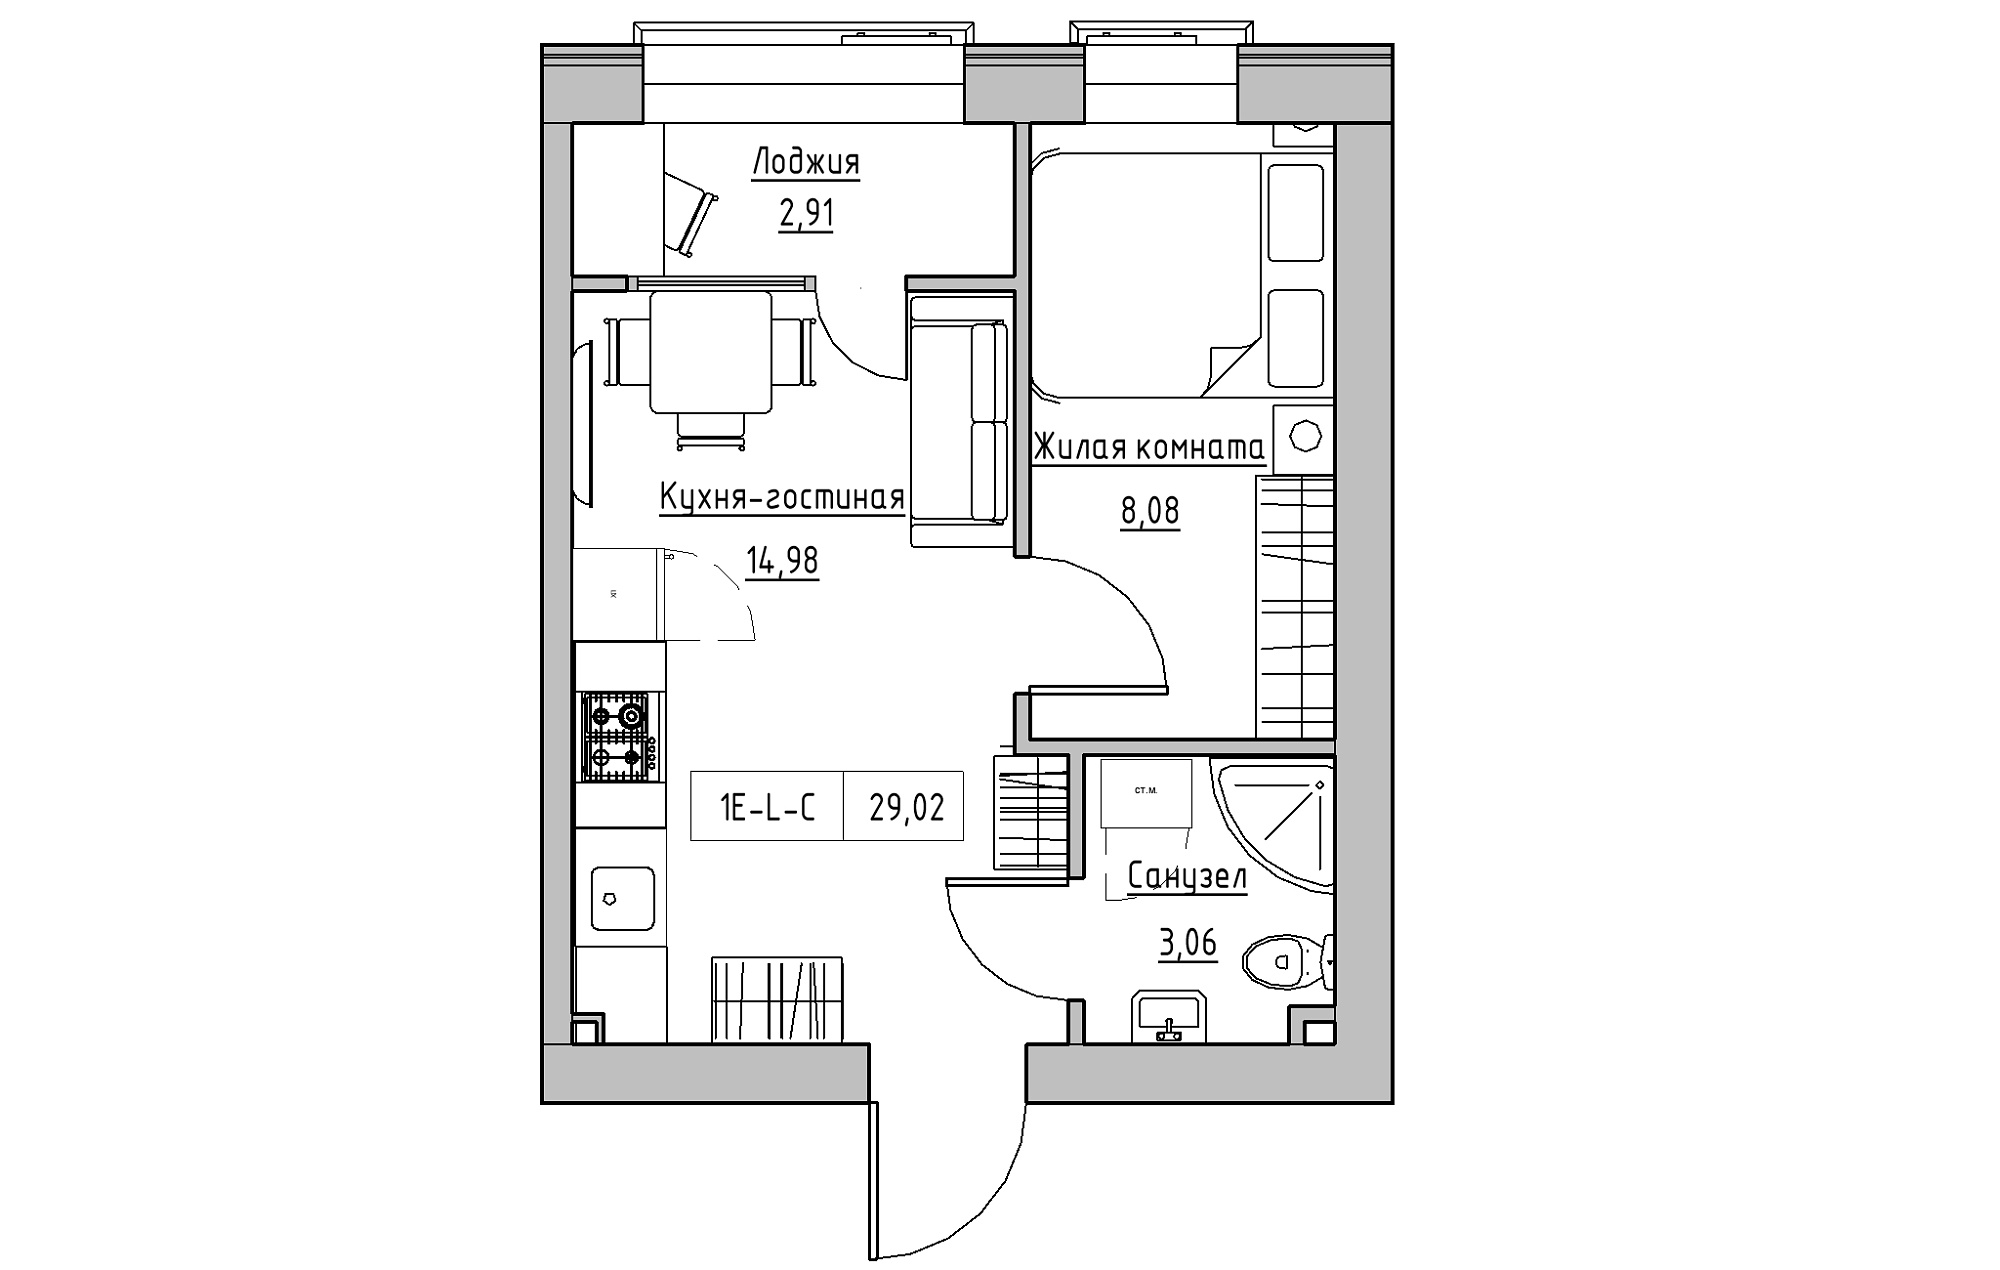 Planning 1-rm flats area 29.02m2, KS-018-01/0007.